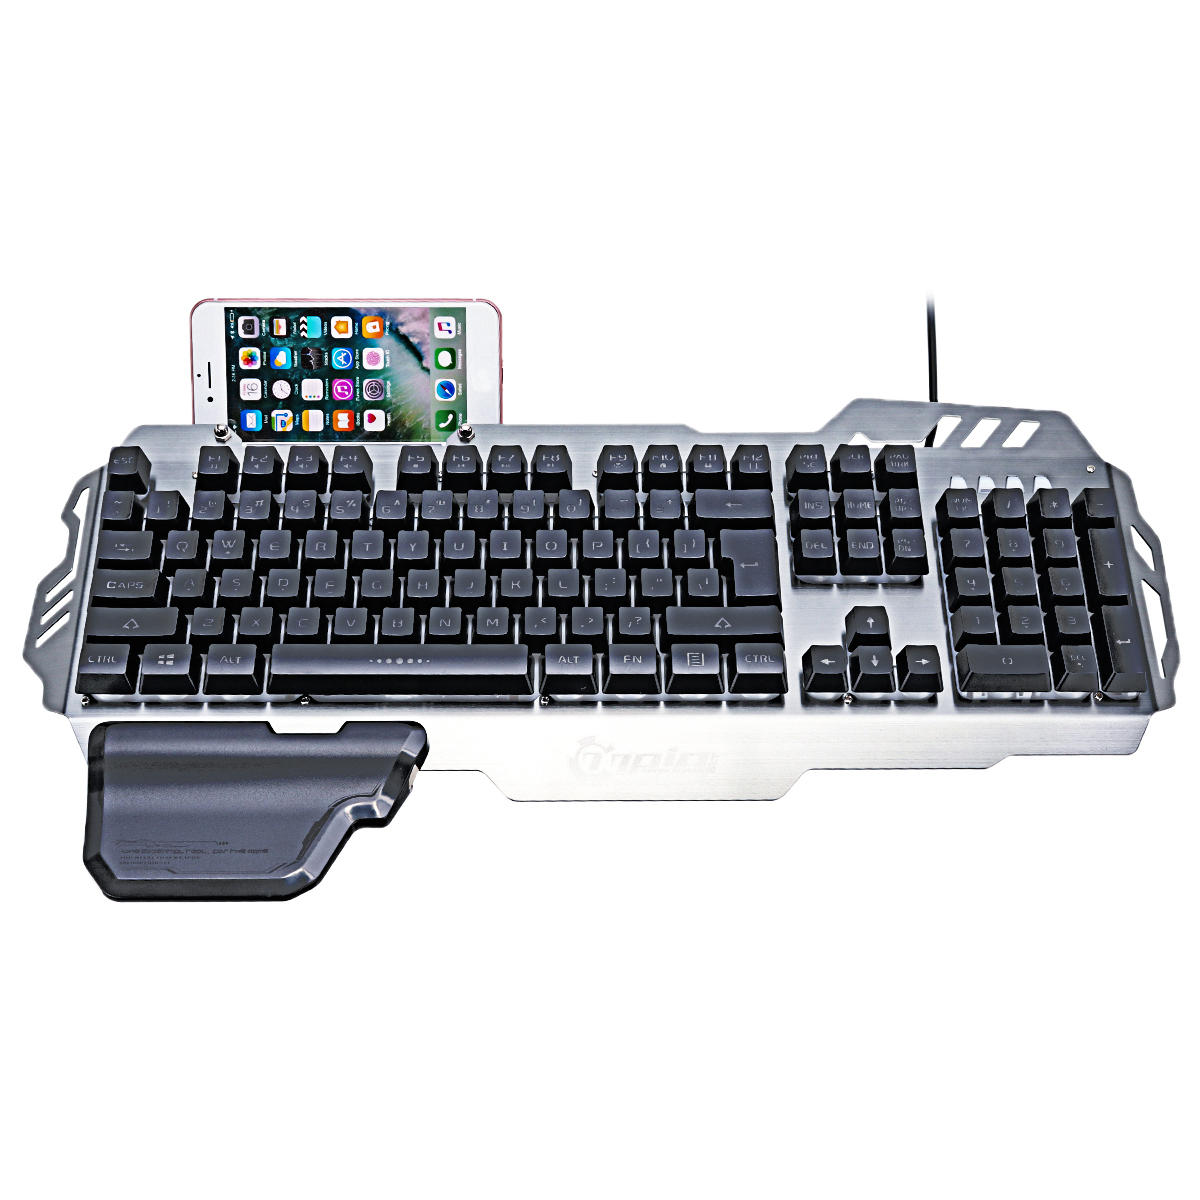 PK-900 104 Tasten USB-Kabel Hintergrundbeleuchtung Mechanisch-Handfeel Gaming Keyboard